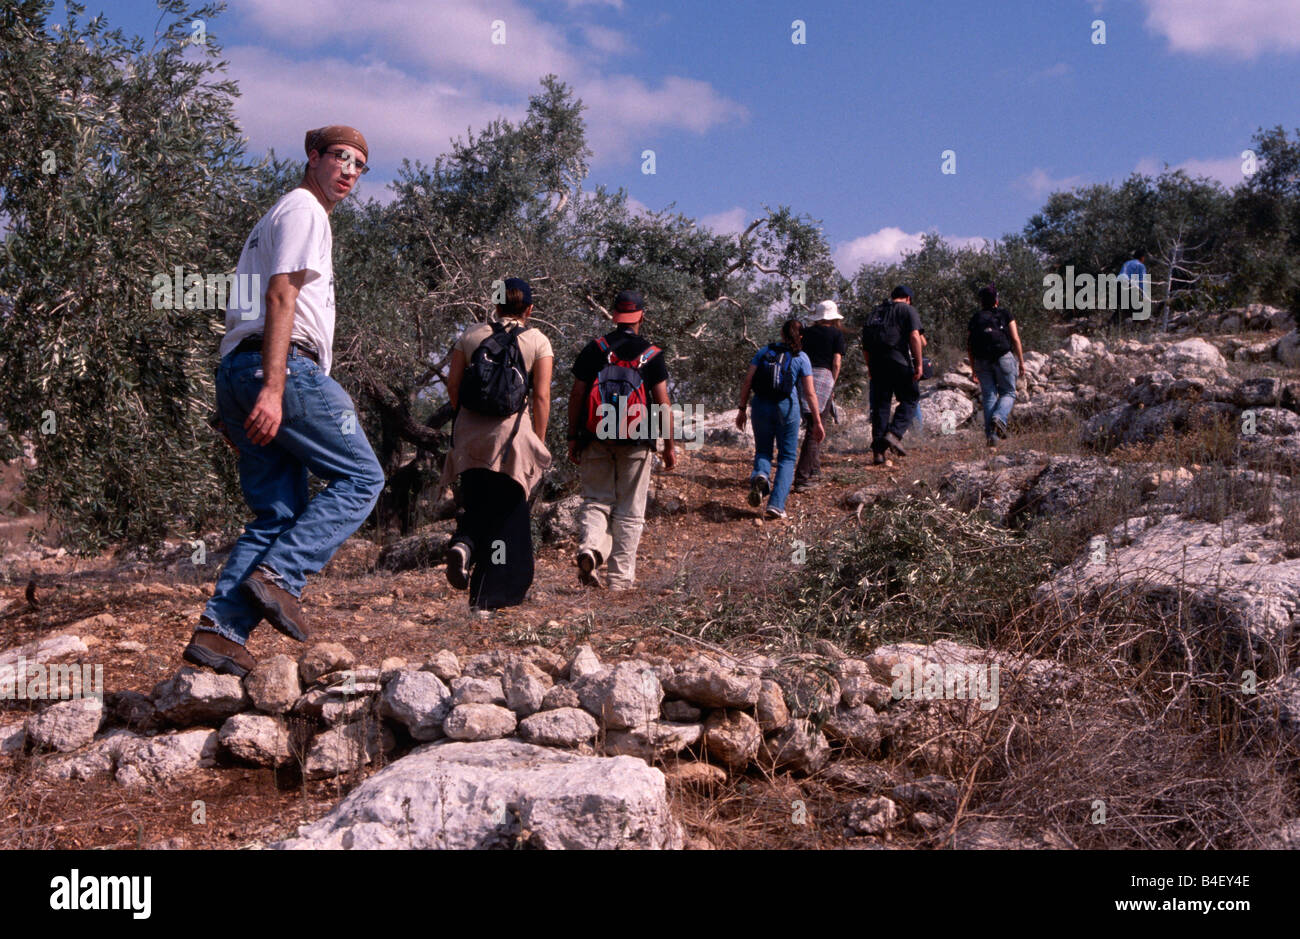 Volontari ISM escursionismo a oliveto, PALESTINA GERUSALEMME Foto Stock